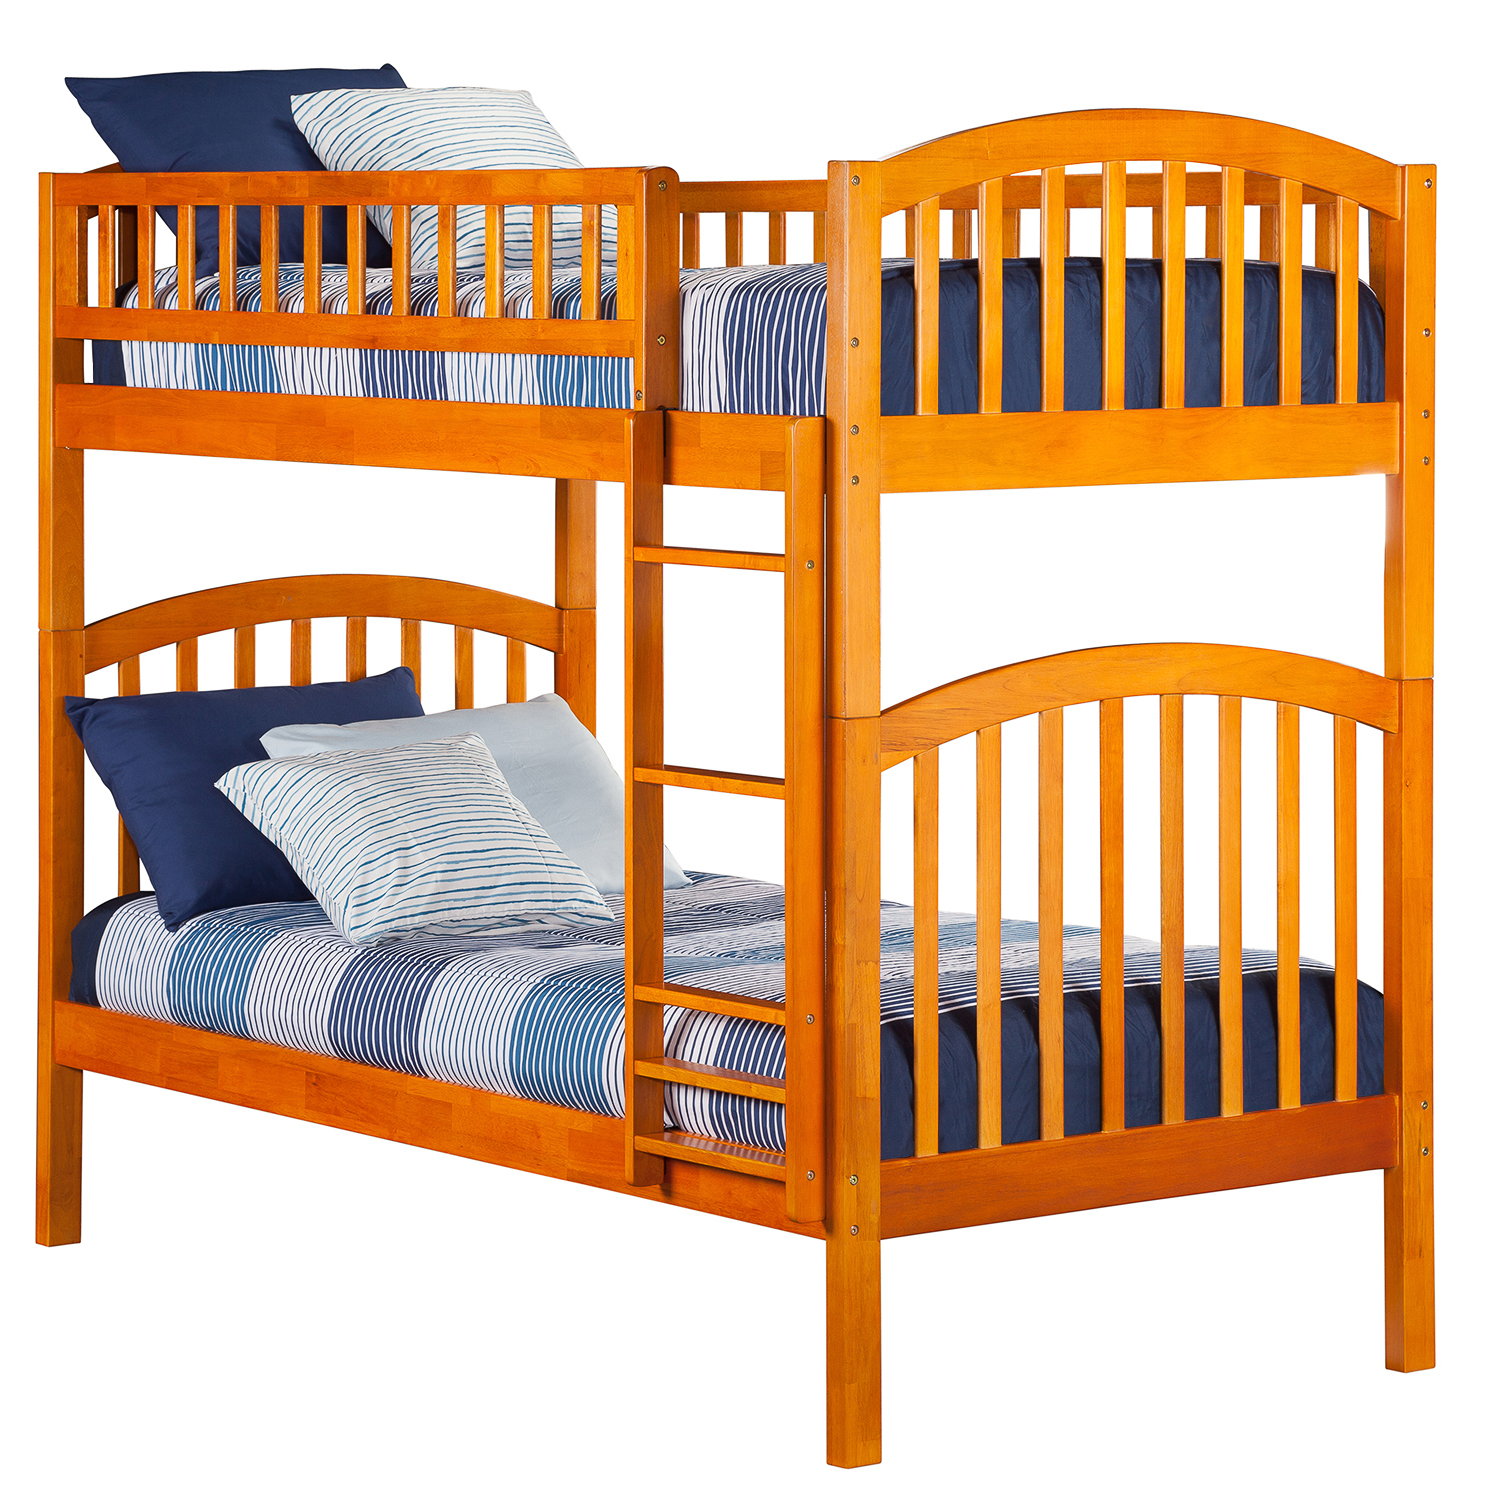 Richland Twin Bunk Bed Caramel, Atlantic Furniture Richland Twin Over Twin Bunk Bed